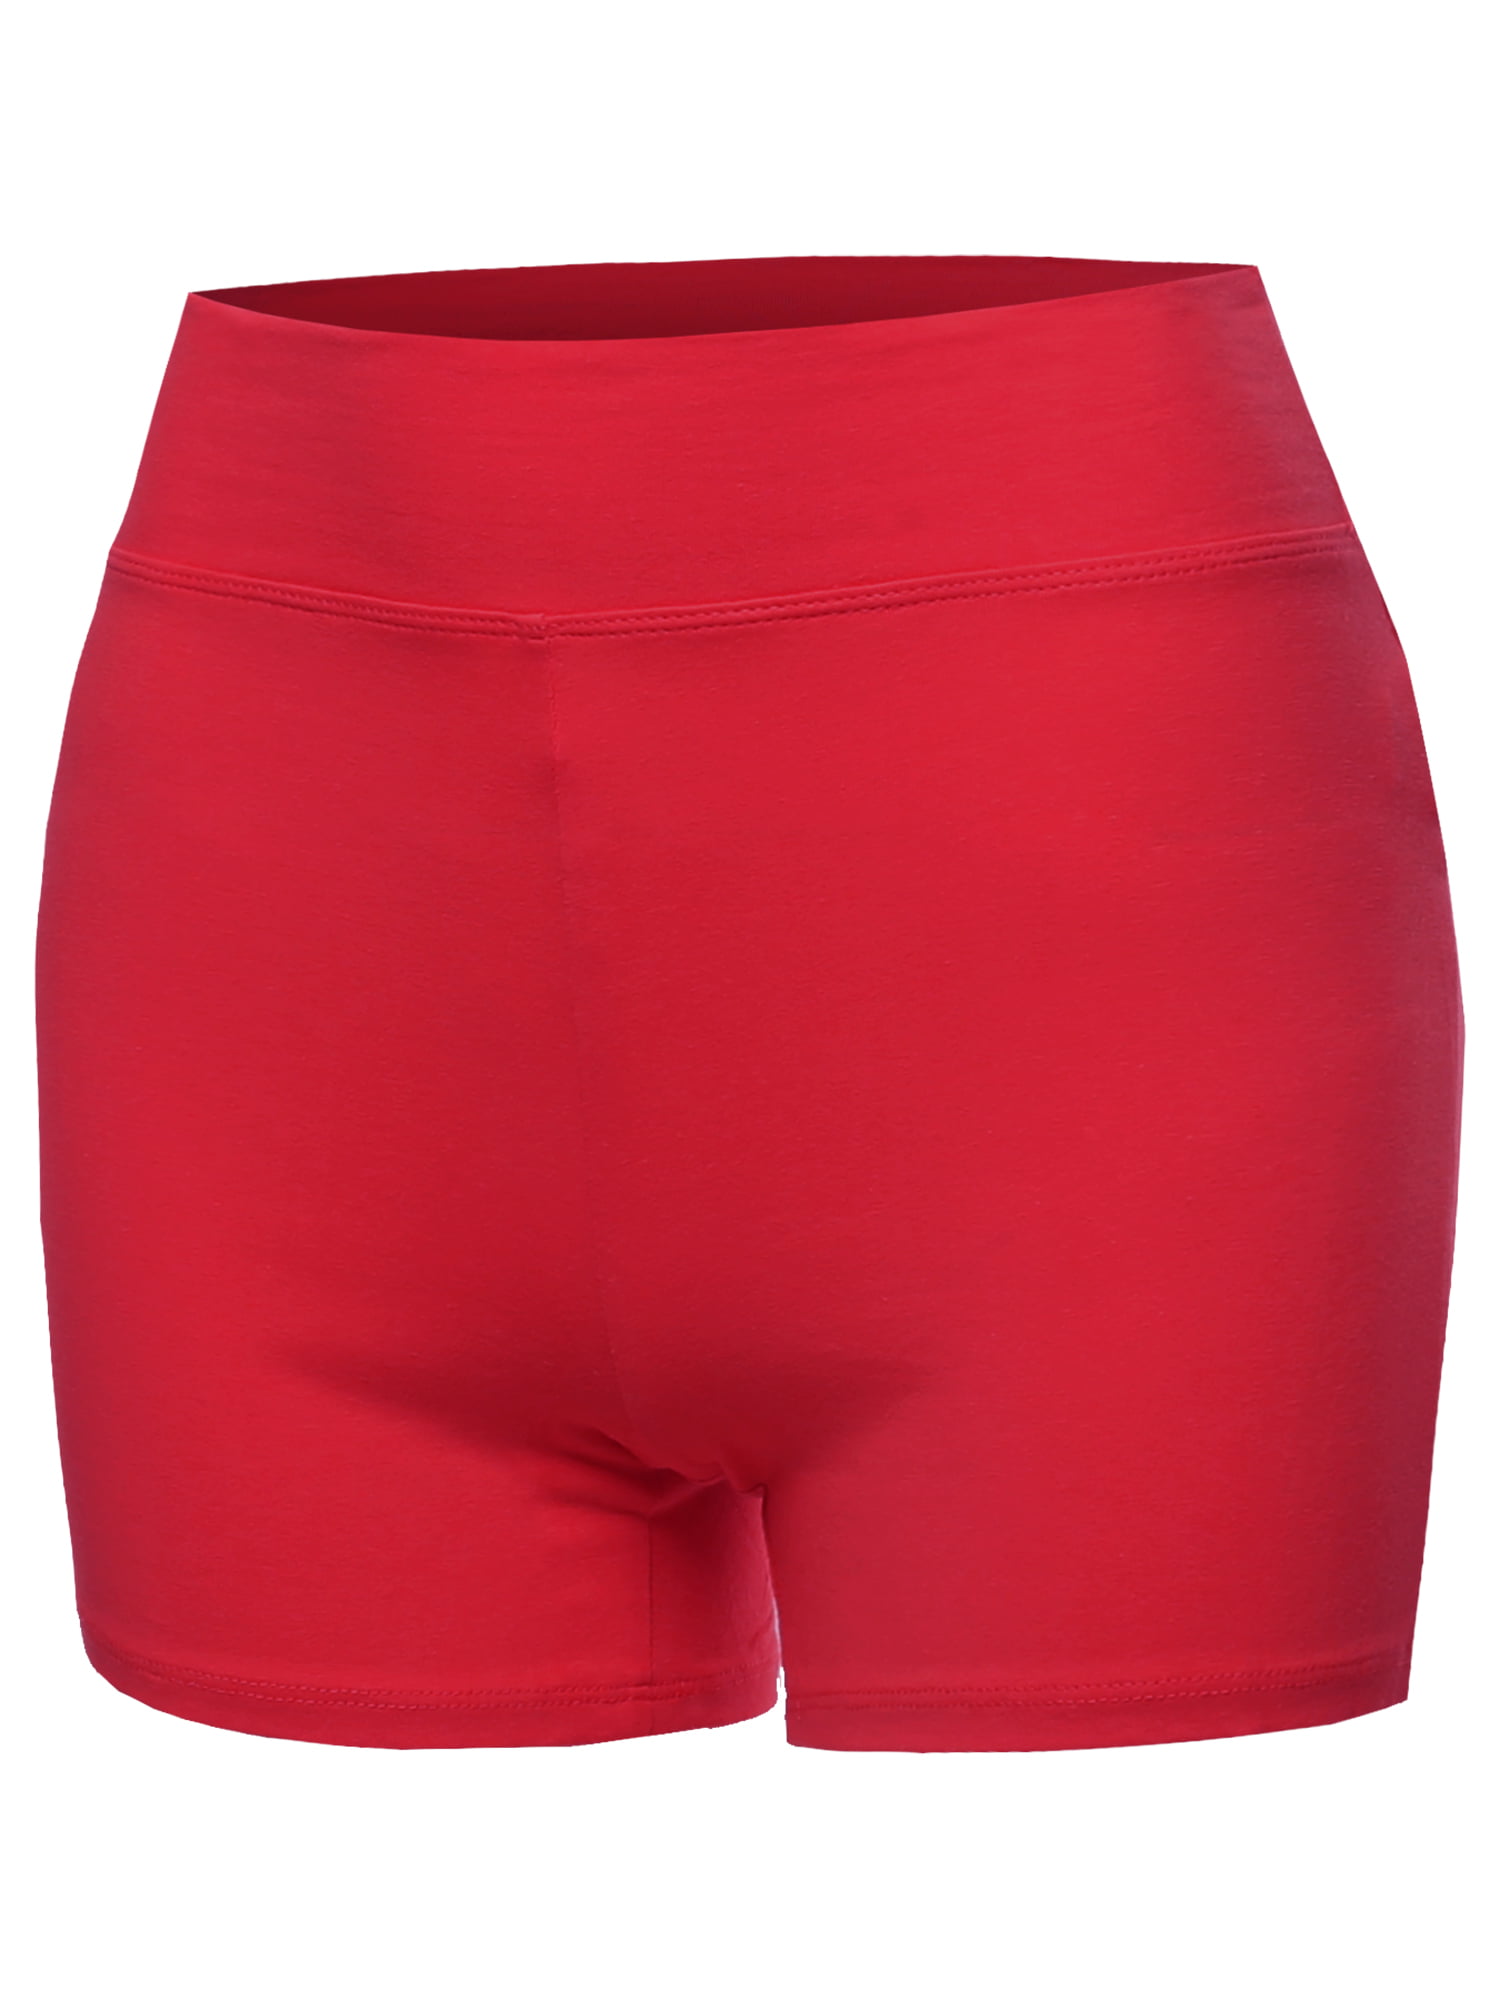 A2Y Women's Basic Solid Premium Cotton High Rise Bike Shorts Ruby 1XL ...